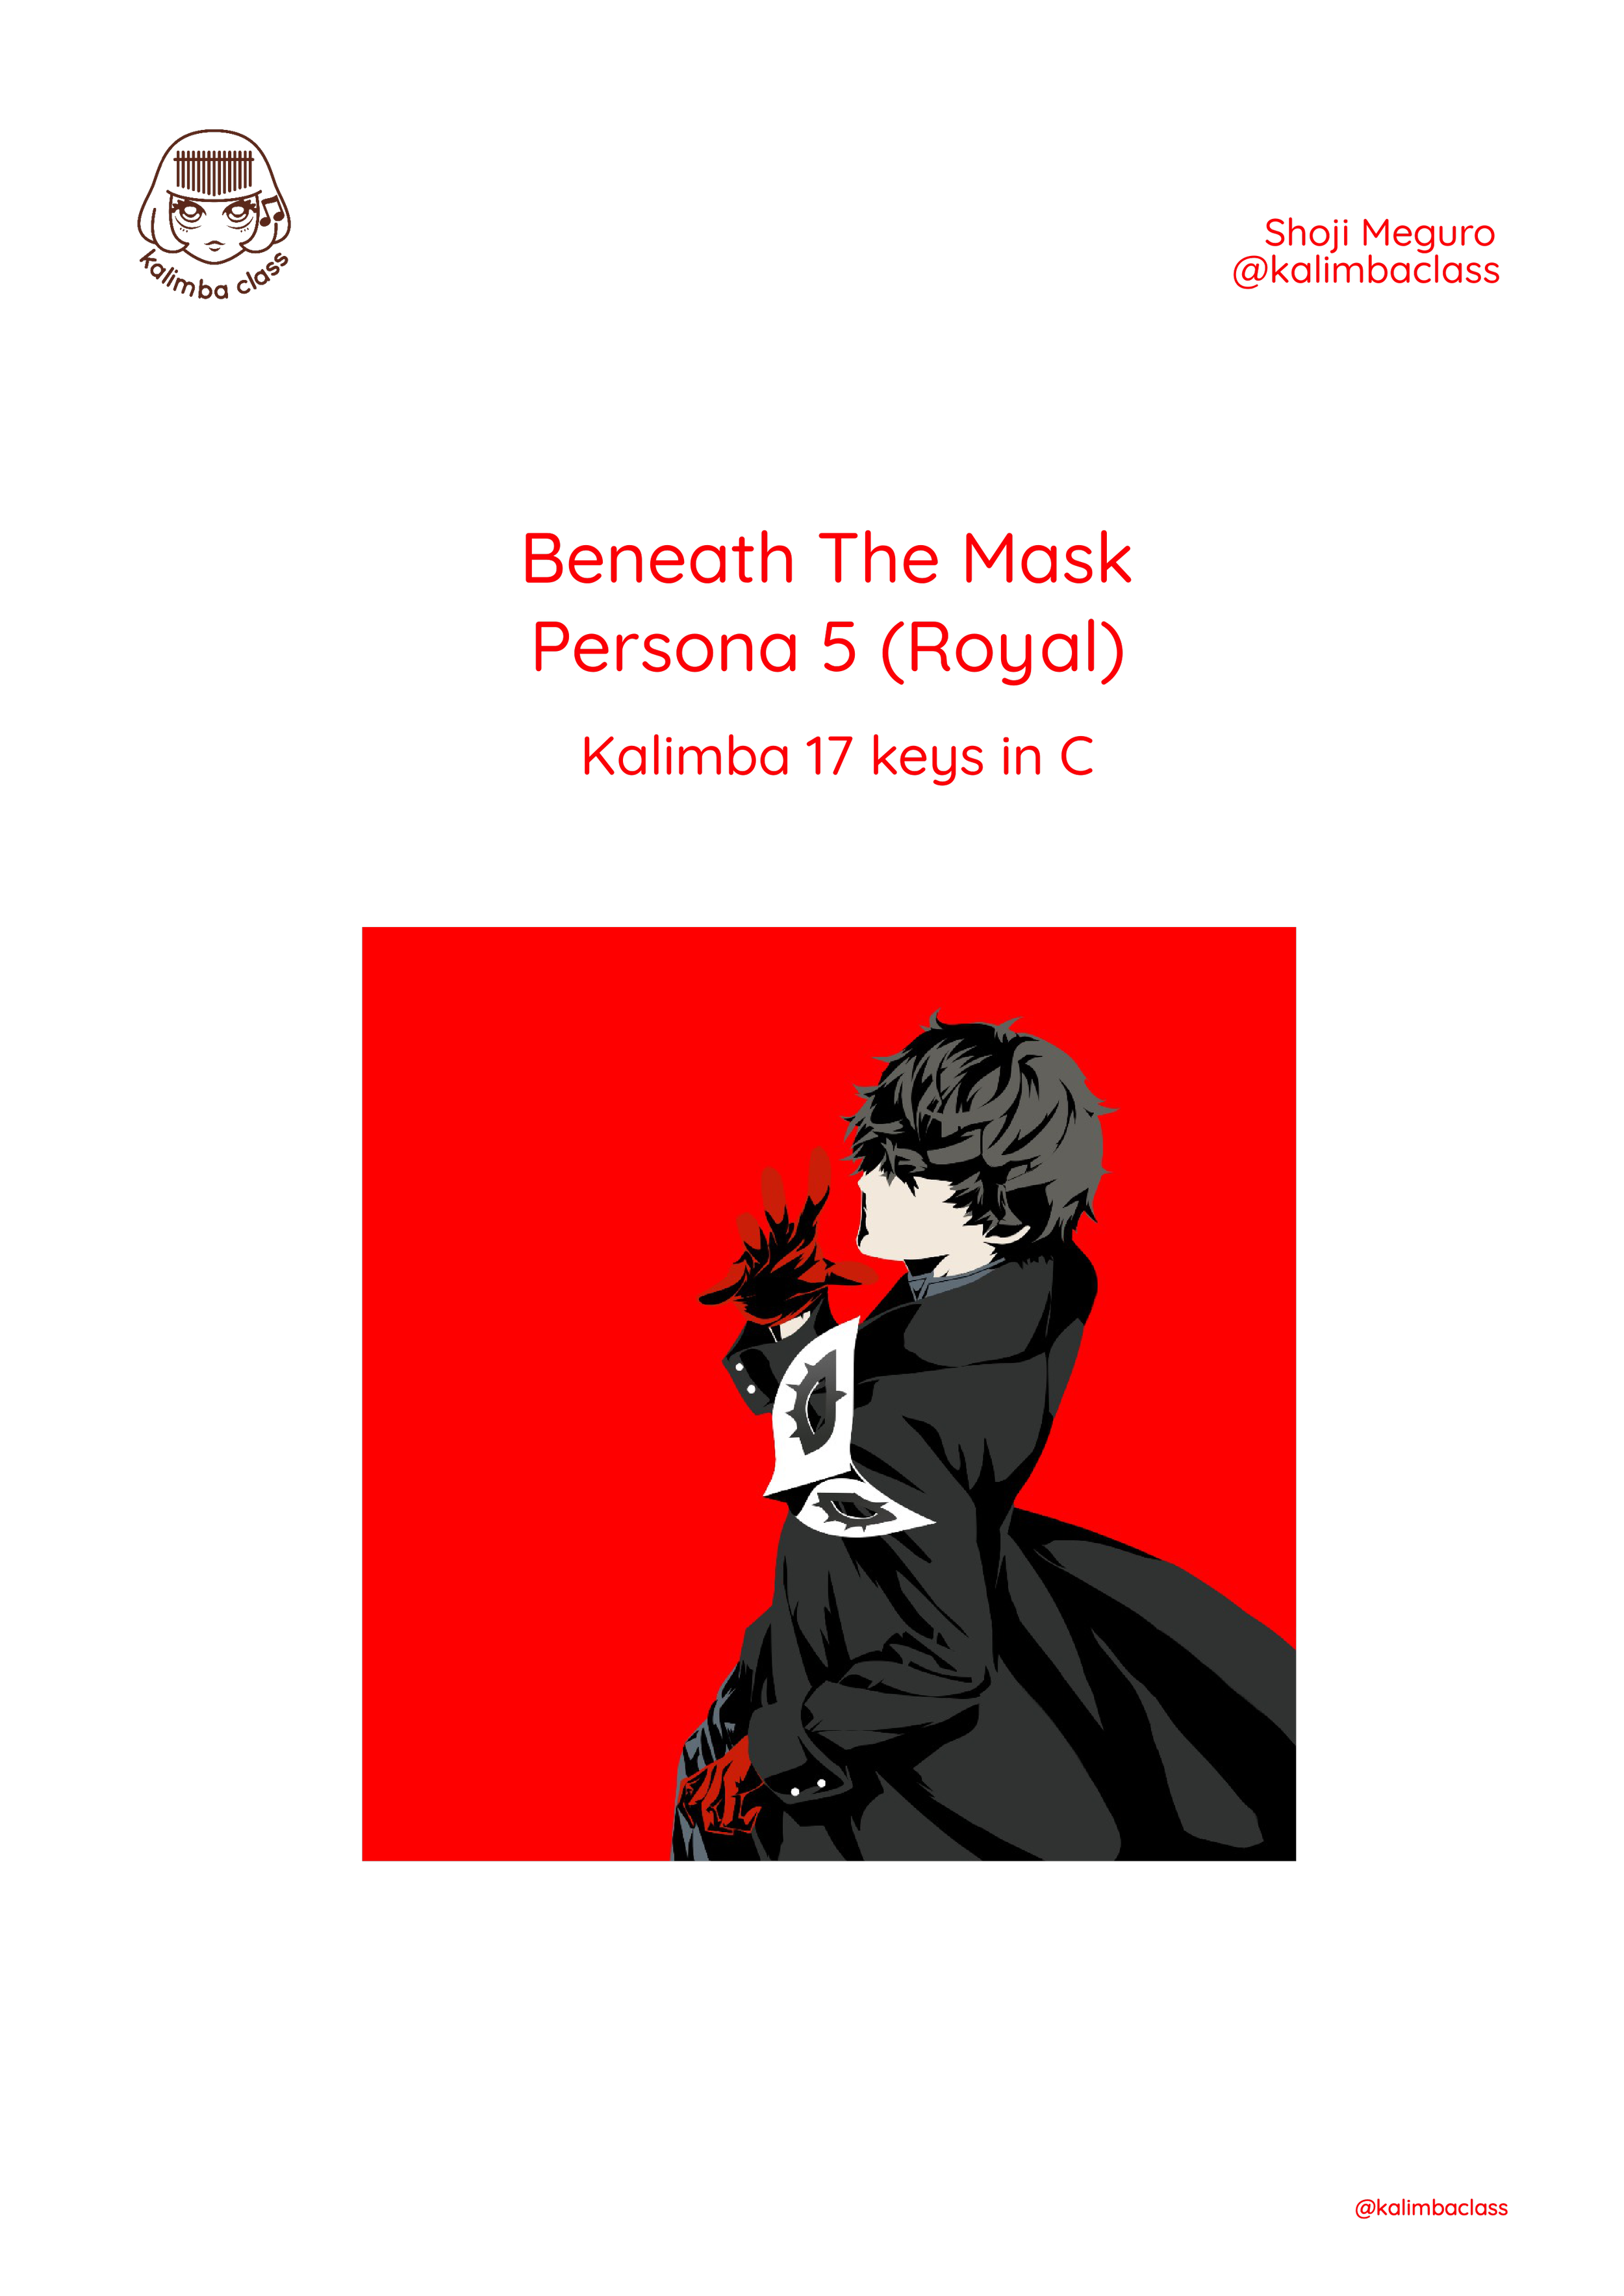 Beneath The Mask, Persona 5 by Shoji Meguro. Kalimba 17 keys in C.